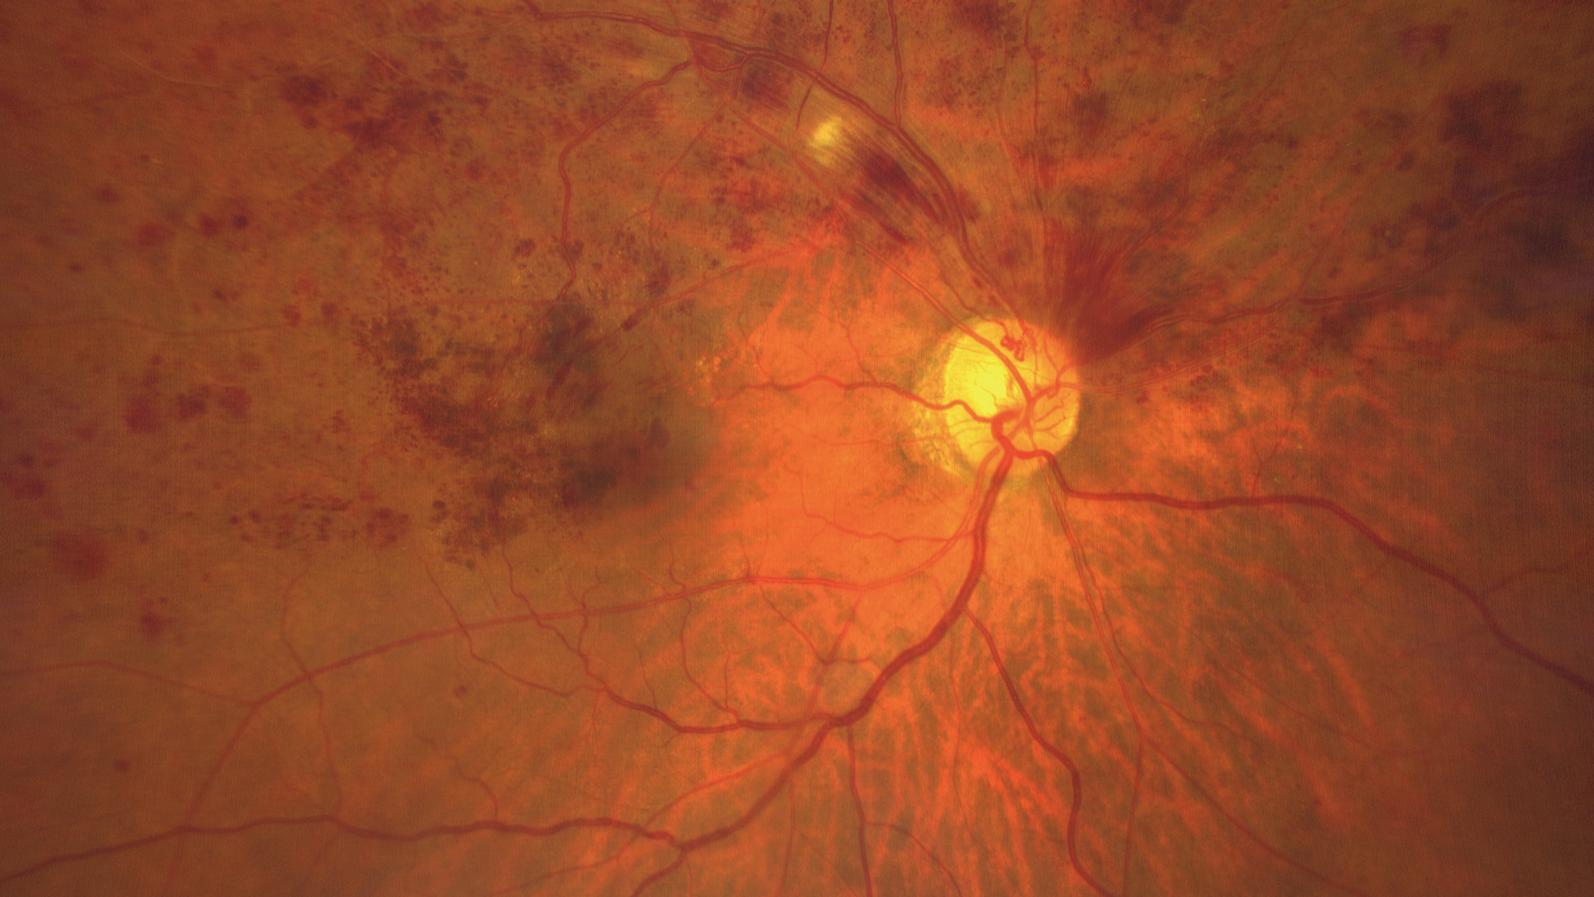 Hemispheric Central Retinal Vein Occlusion [75-yr old male]